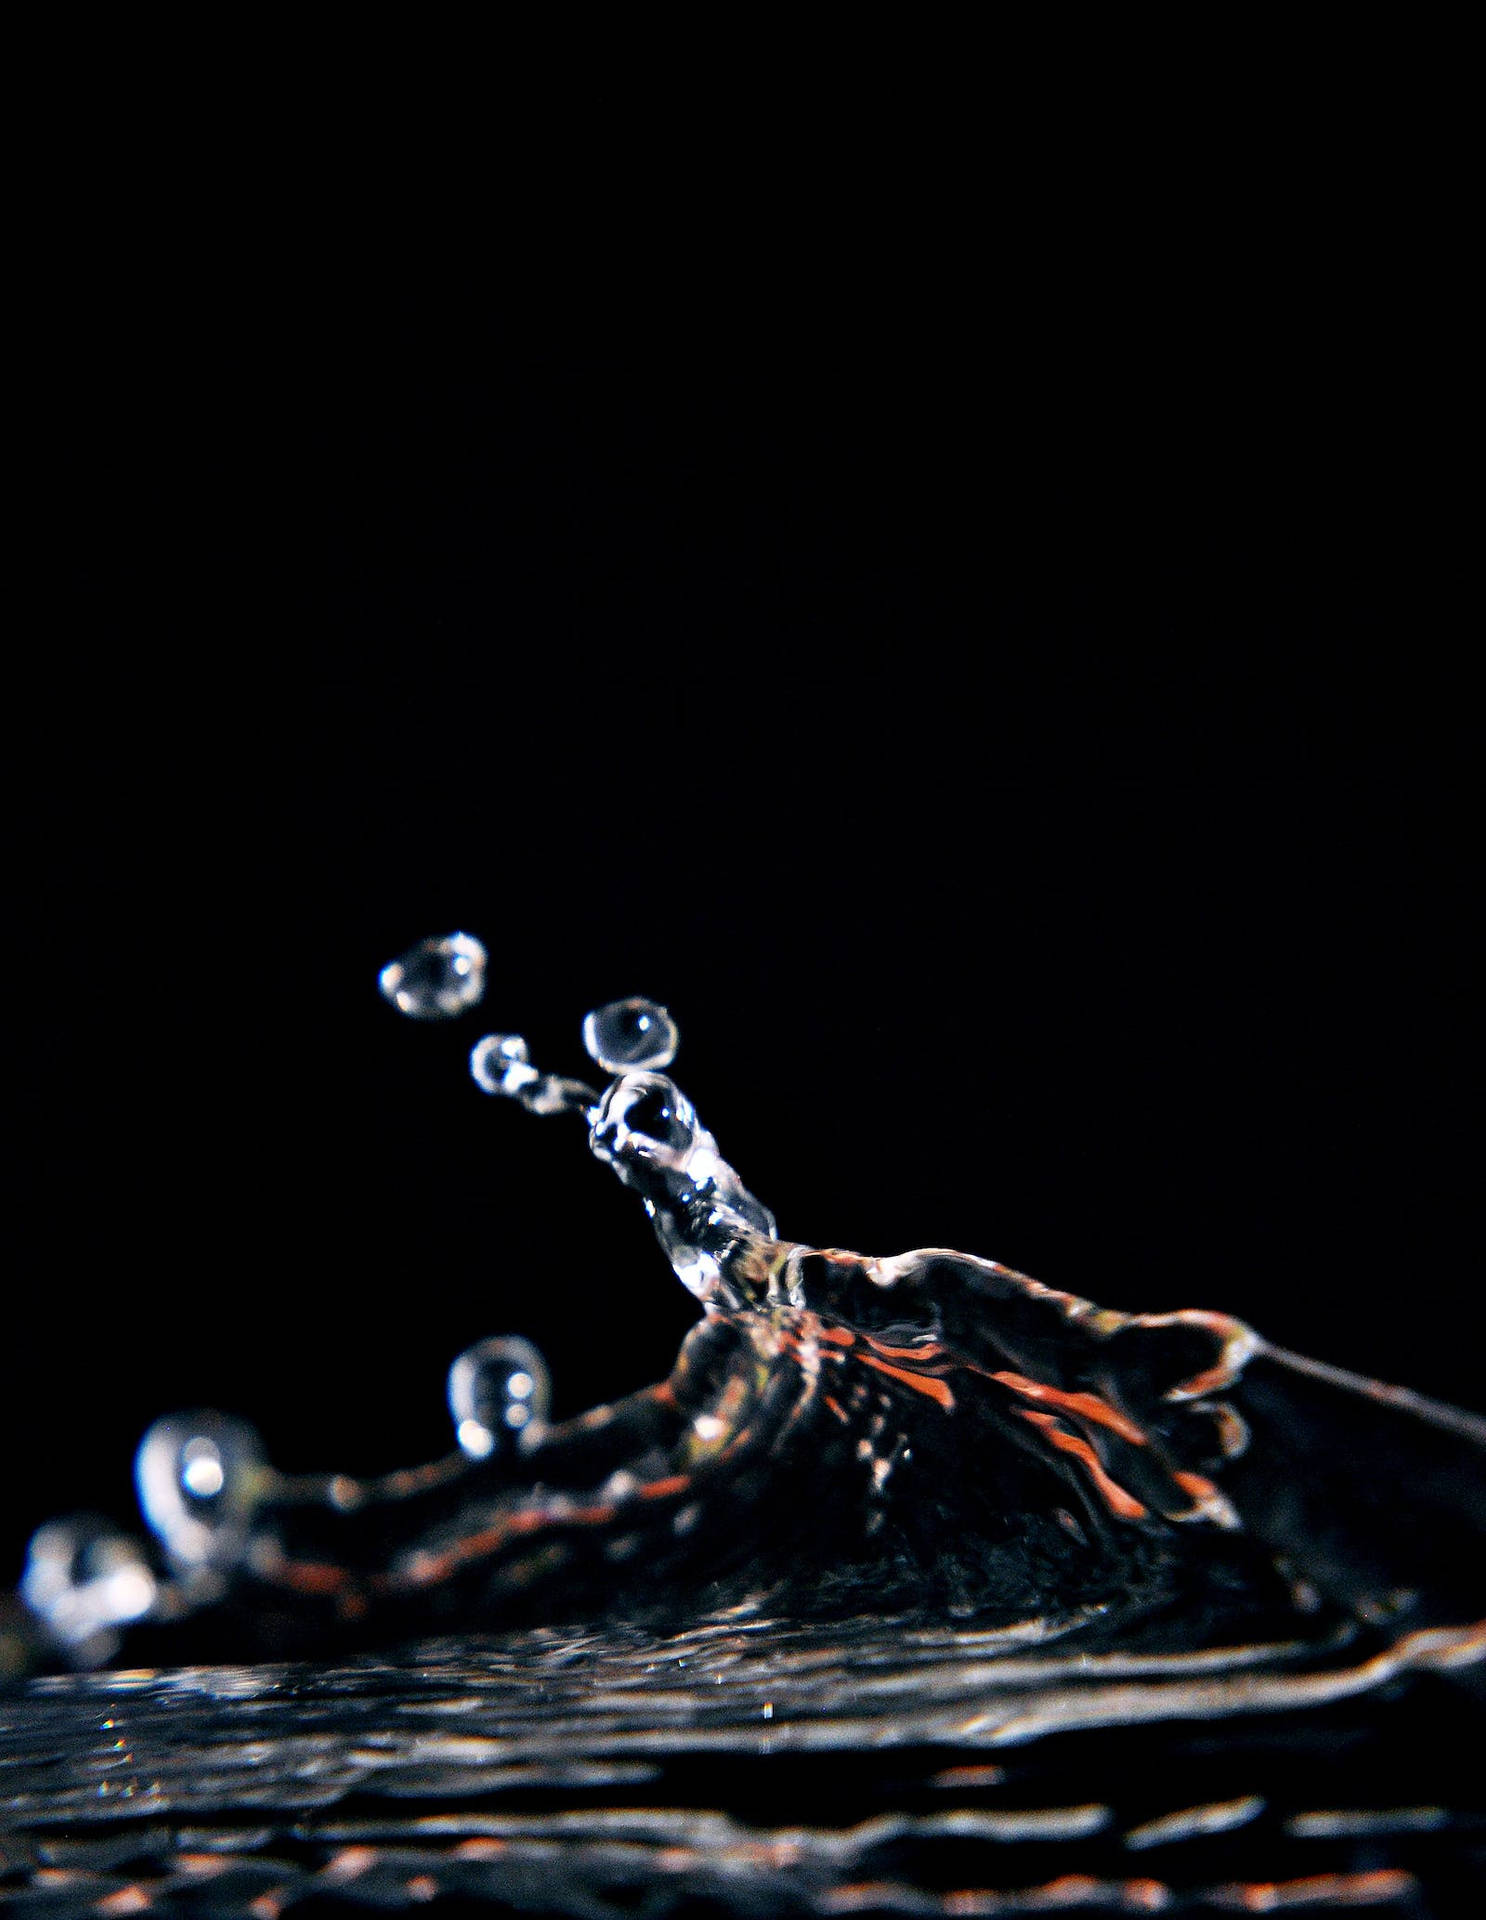 Vand Splash Minimal Mørk Iphone Wallpaper